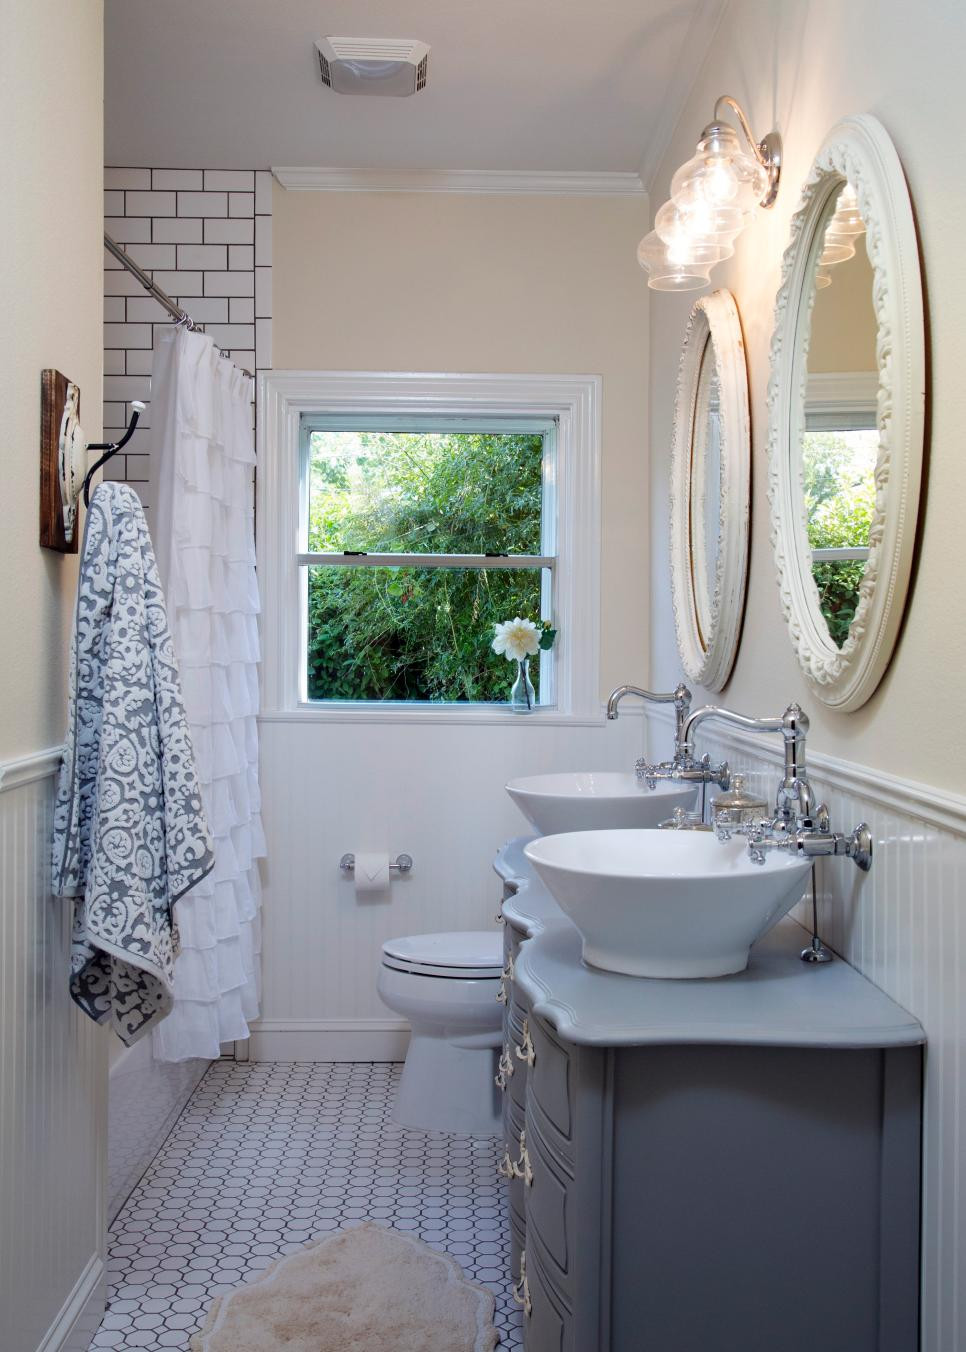 Joanna Gaines Bathroom Design
 Get the Look Fixer Upper Bathroom 2nd Edition House